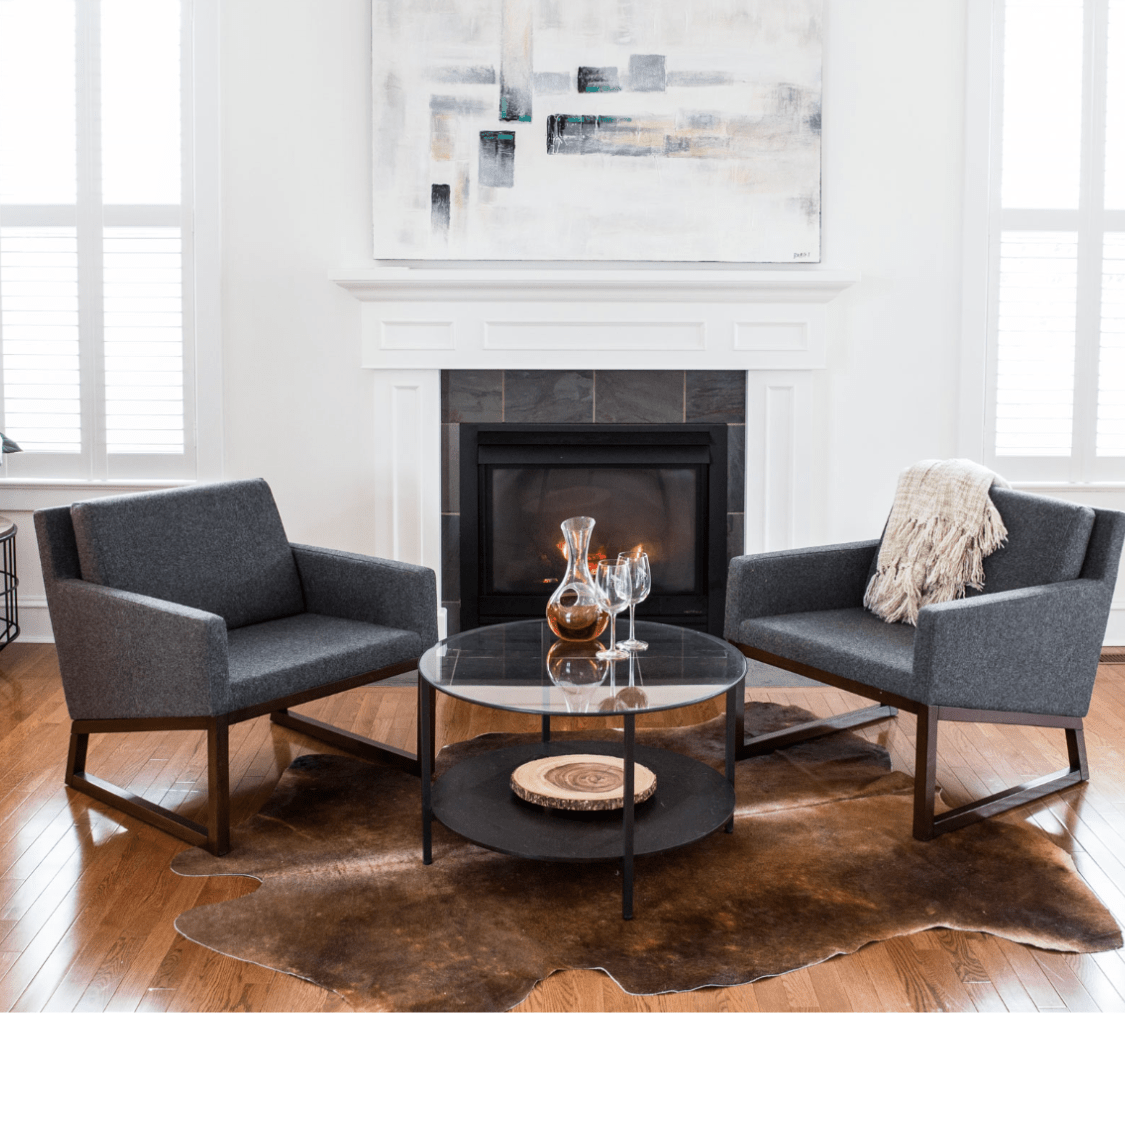 Upholstery Armchair Nova Lounge Chair - Your Bar Stools Canada